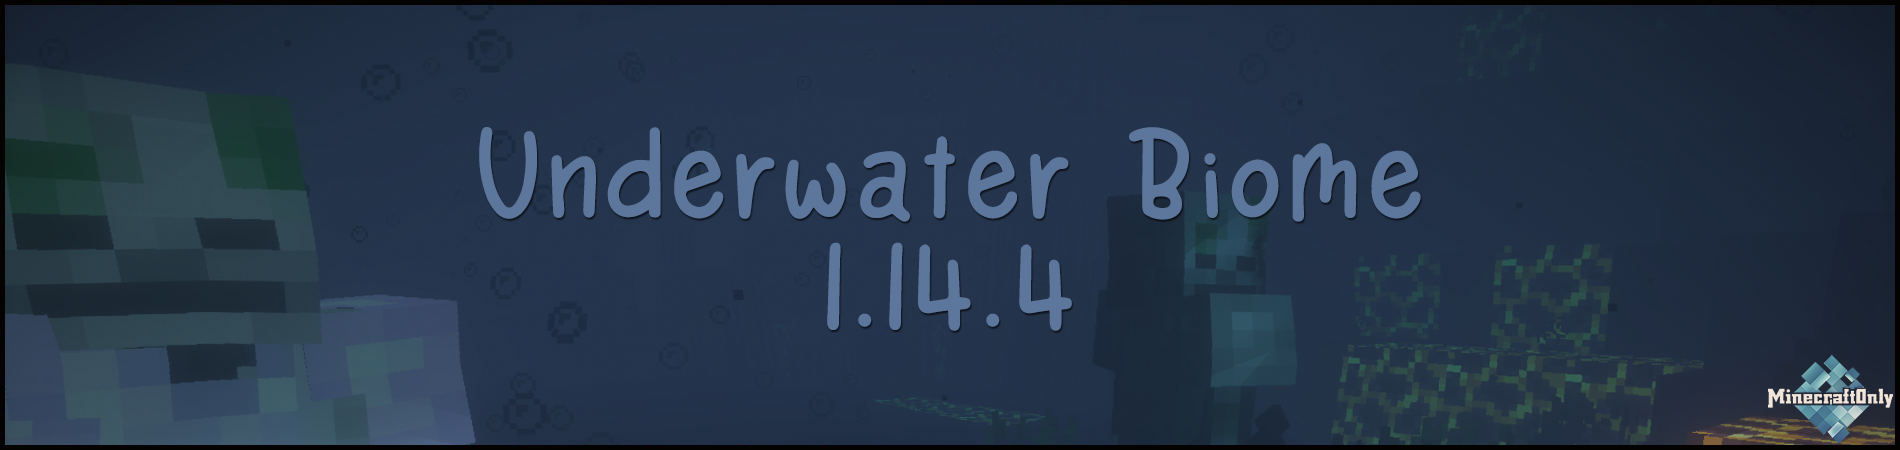 Underwater Biome [1.14.4]